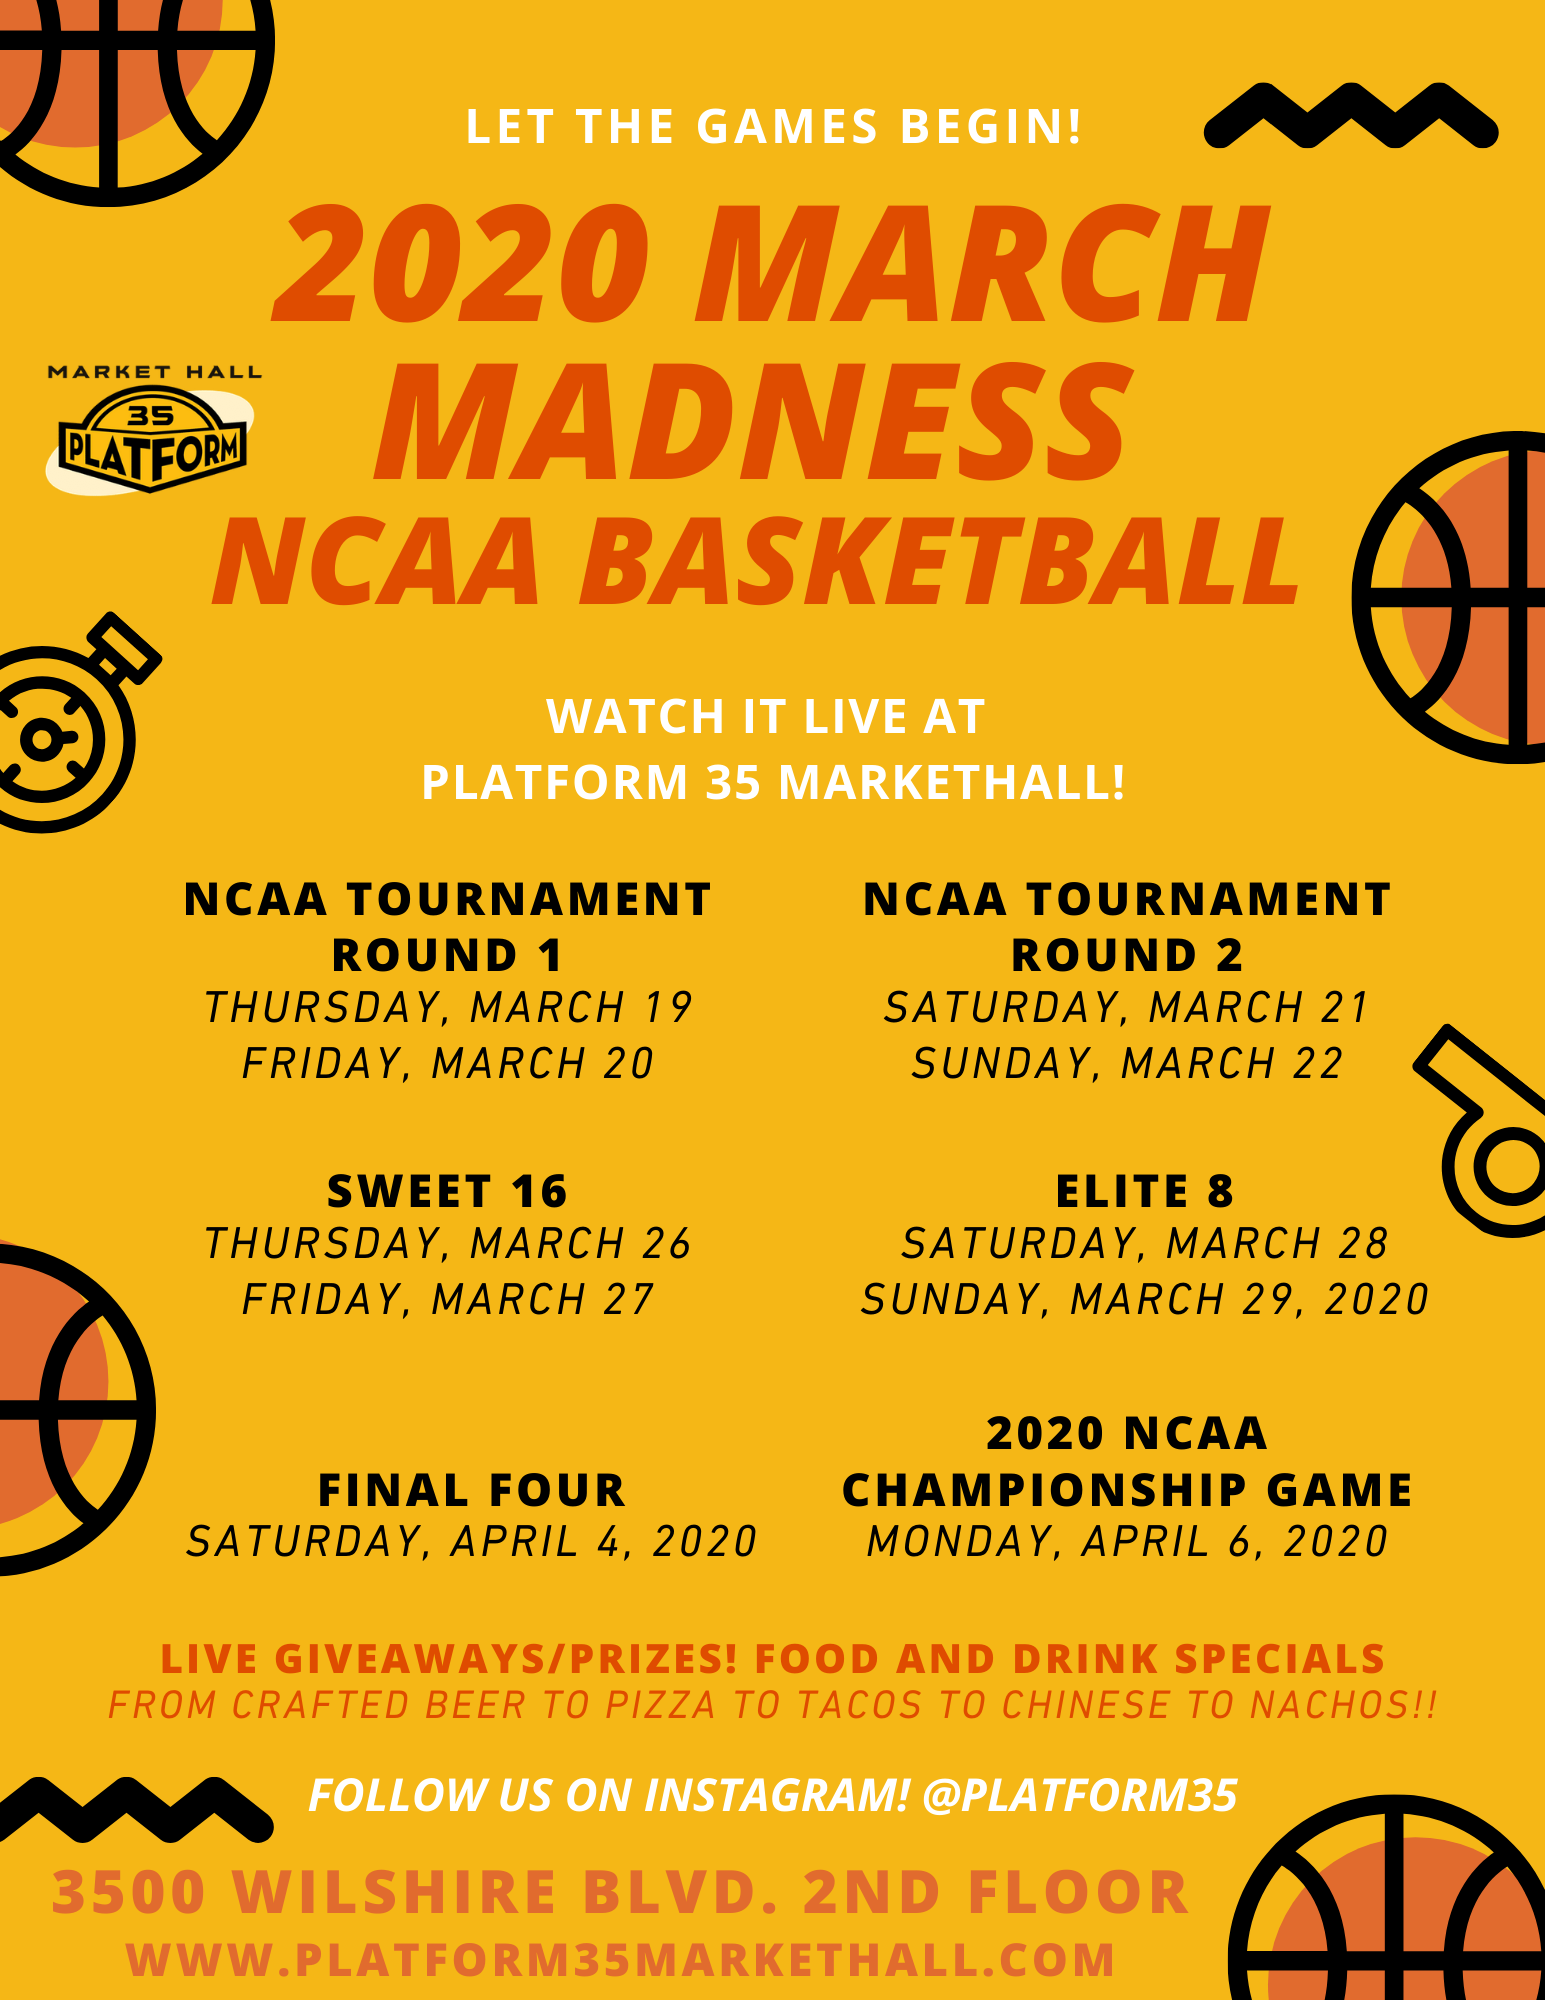 2020 MARCH MADNESS NCAA Basketball at Platform35